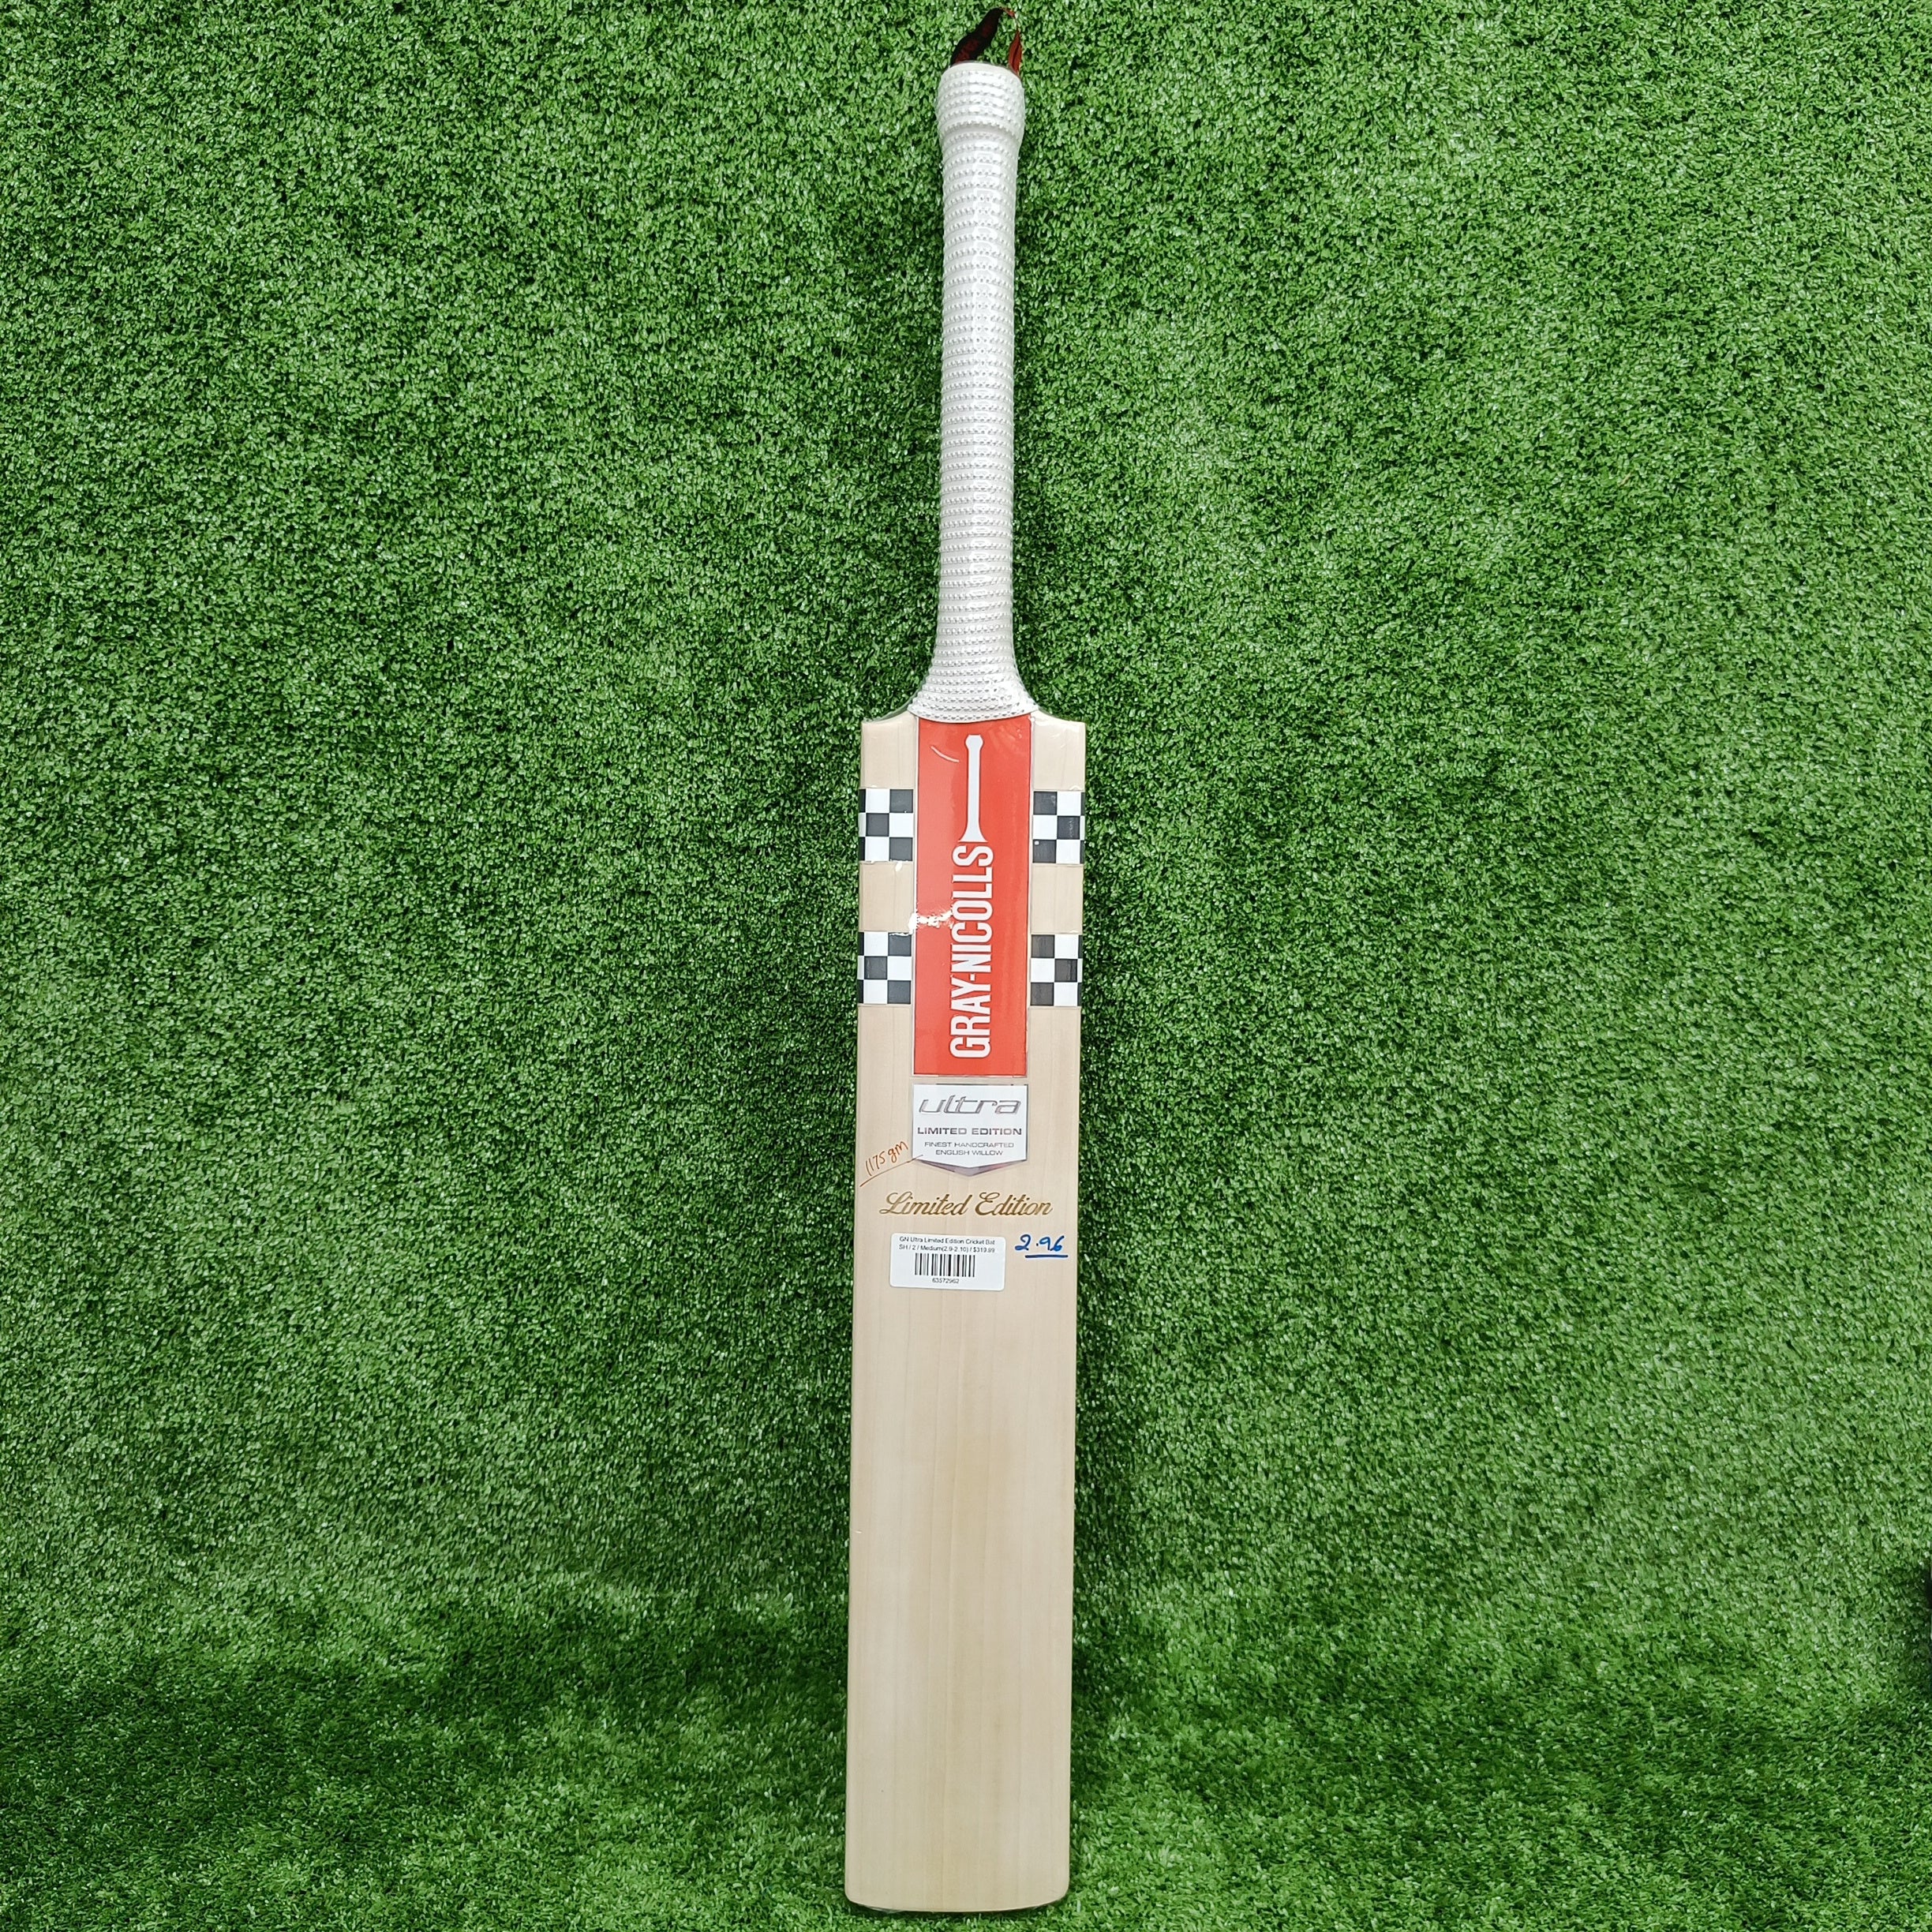 Gray-Nicolls Ultra Limited Edition Cricket Bat